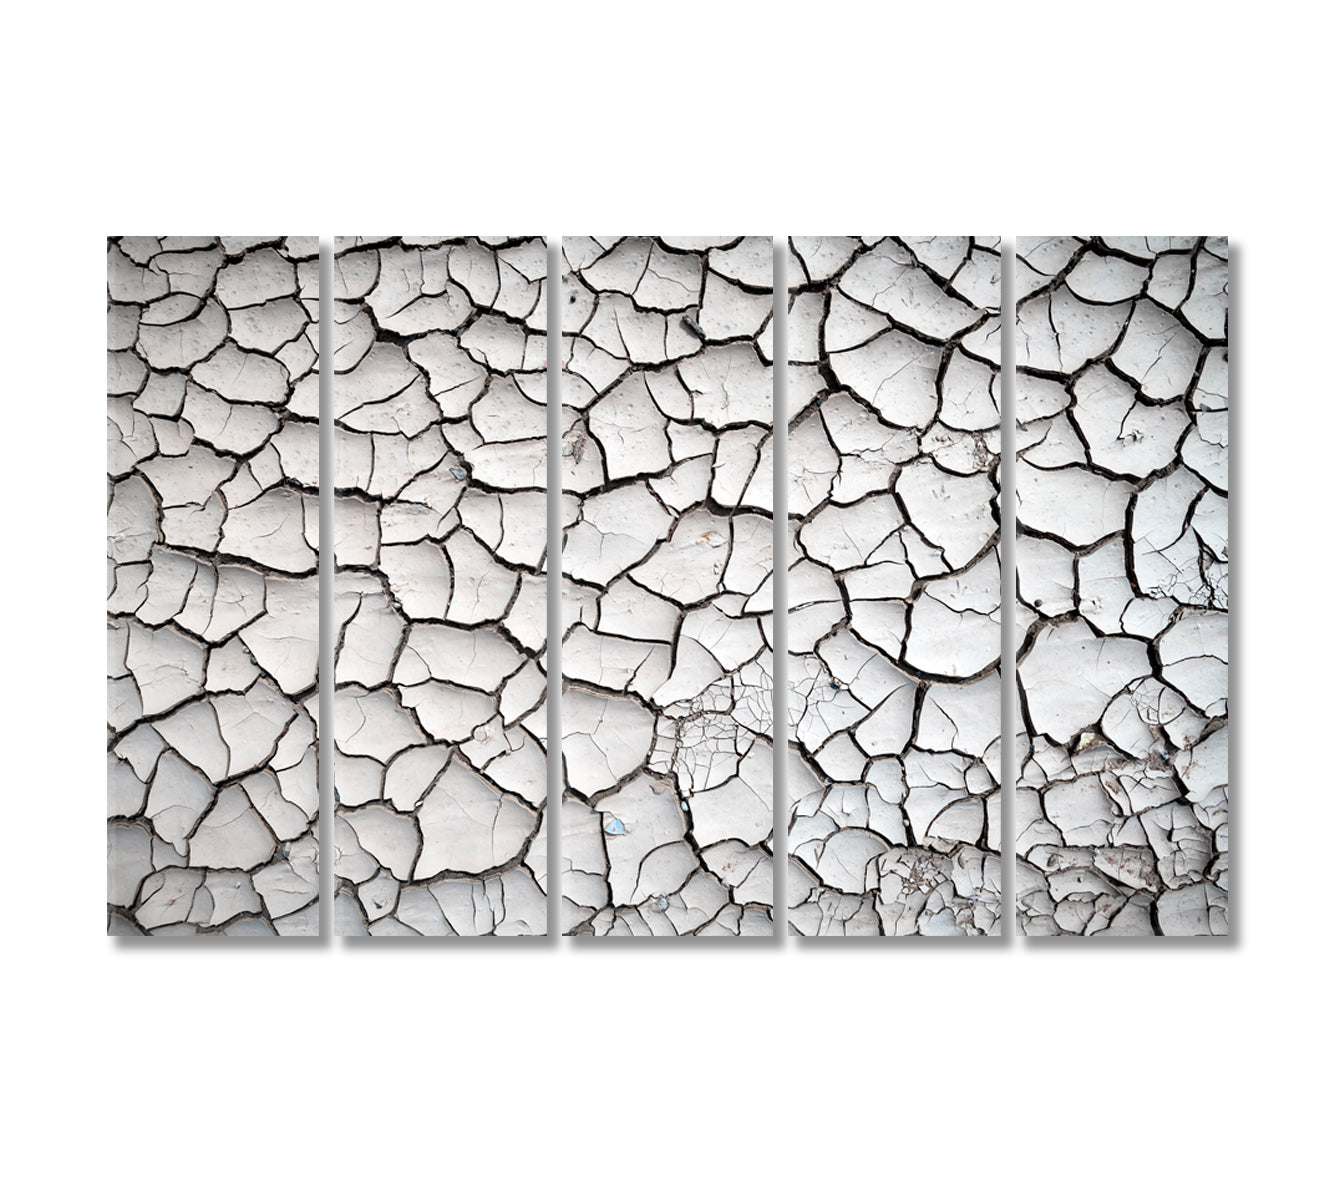 Cracked Land Canvas Print-Canvas Print-CetArt-5 Panels-36x24 inches-CetArt